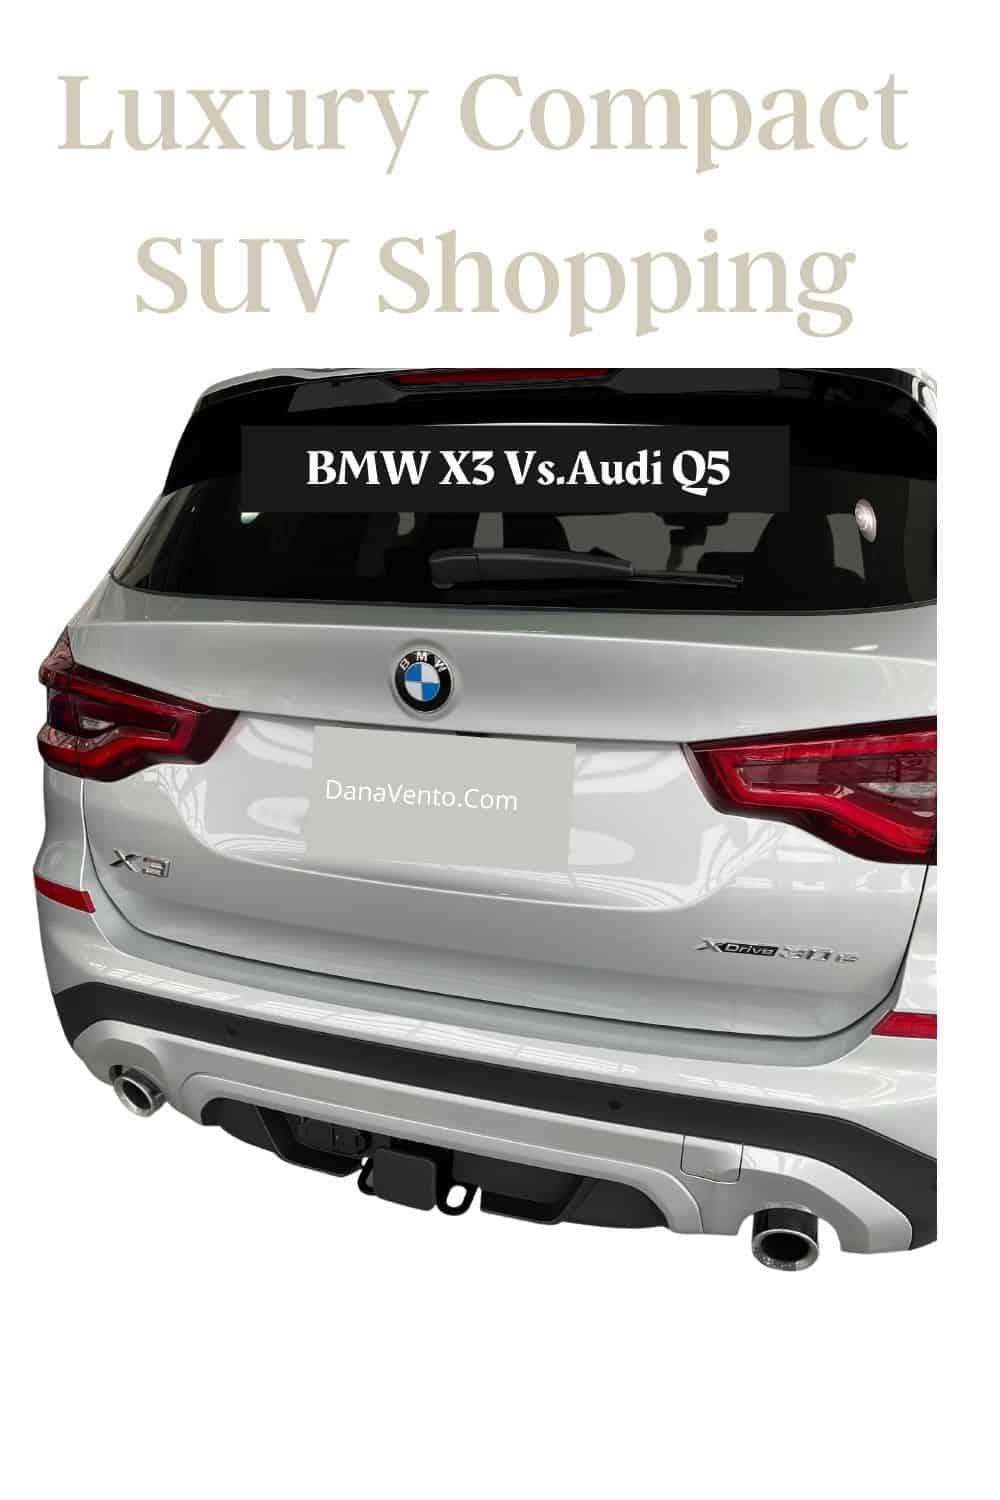 Luxury Compact SUV BMW X3